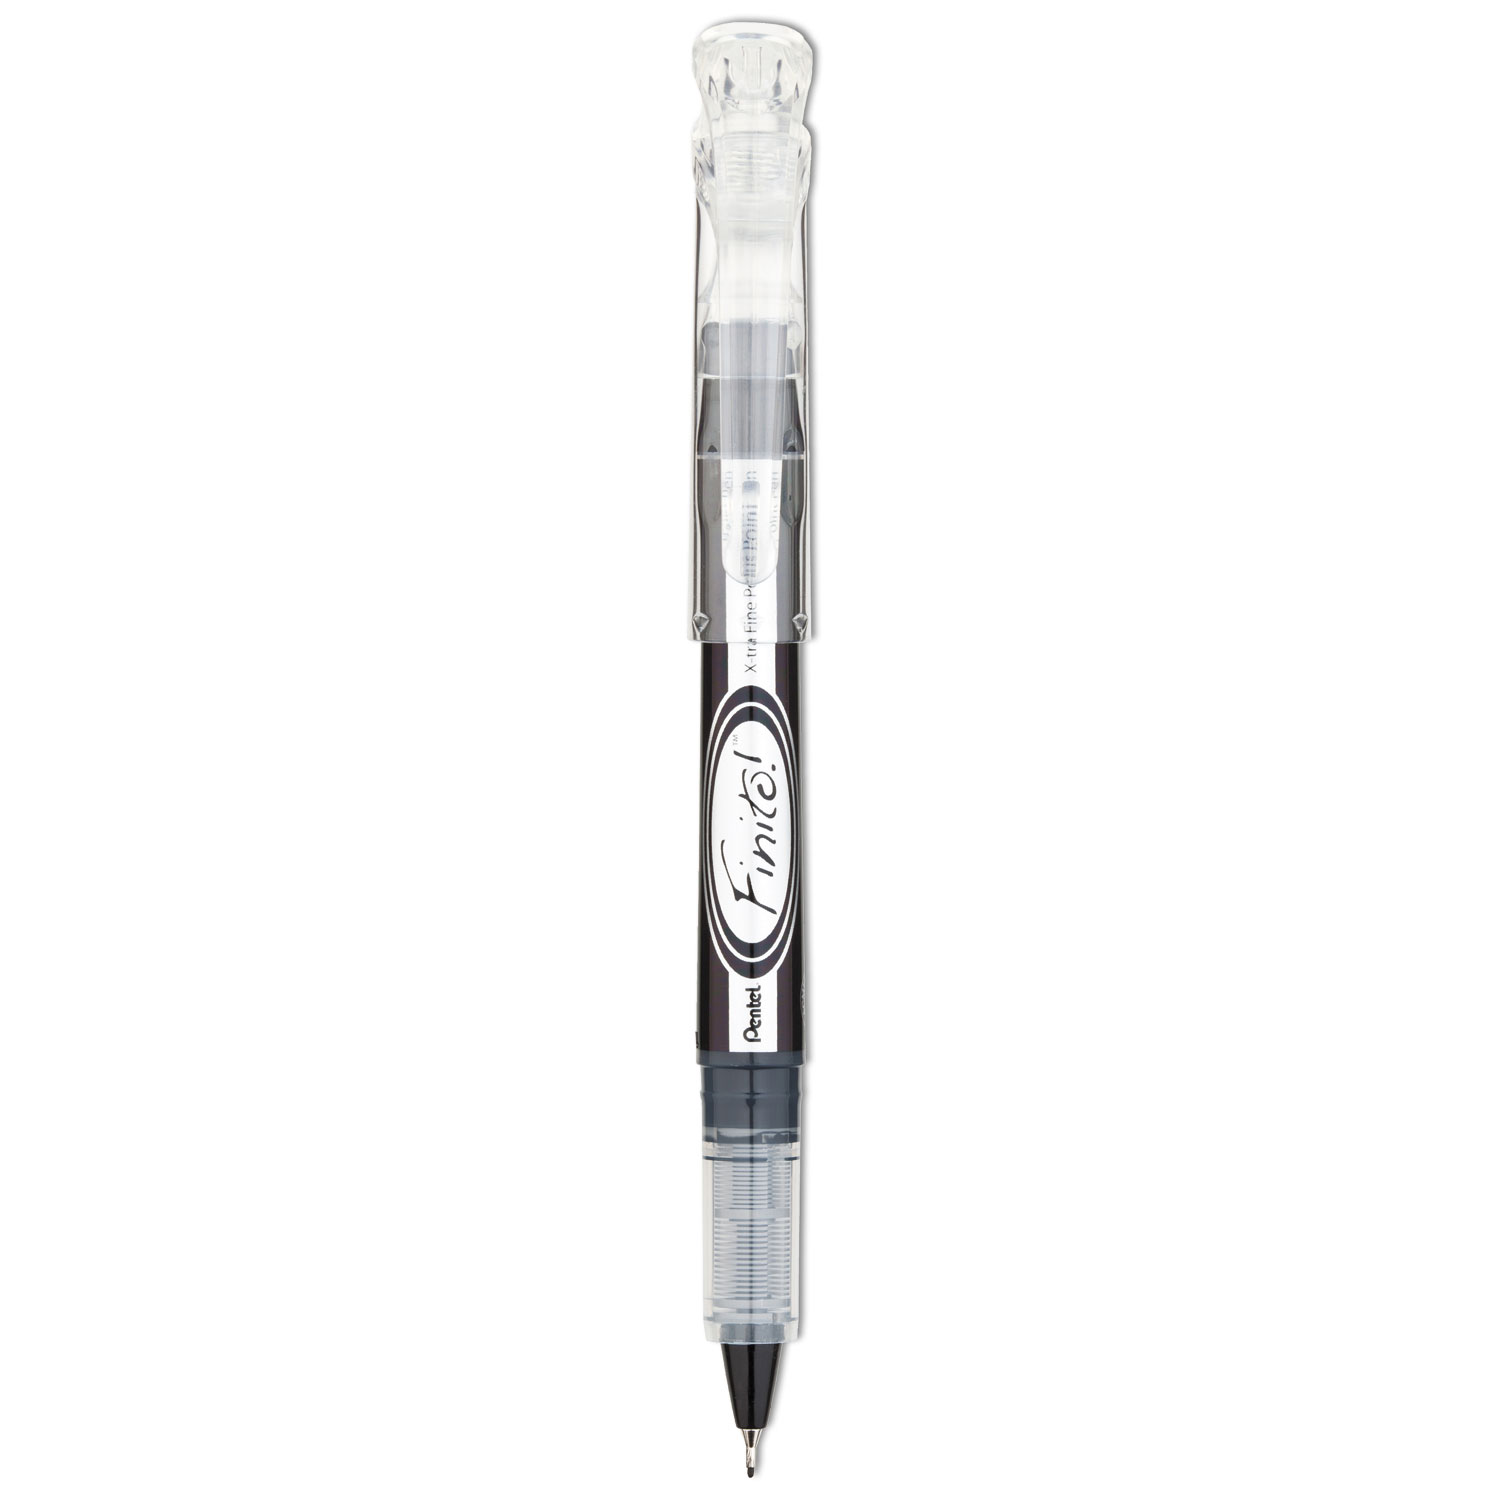  Pentel SD98A Finito! Stick Porous Point Pen, Extra-Fine 0.4mm, Black Ink, Black/Silver Barrel (PENSD98A) 